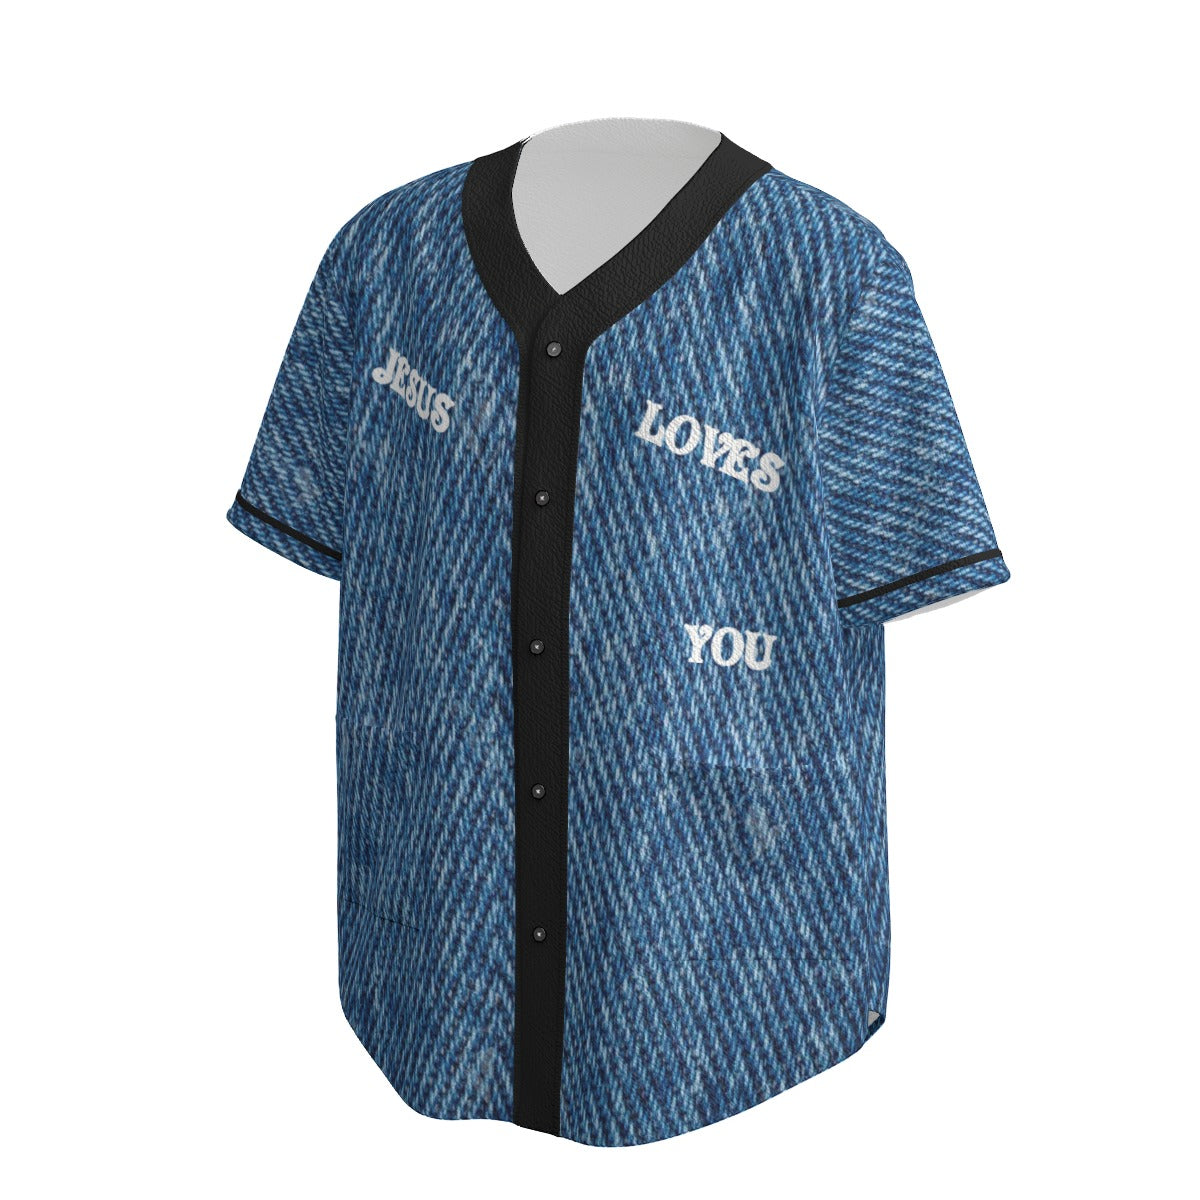 All-Over Print Men's Textured Baseball Jersey